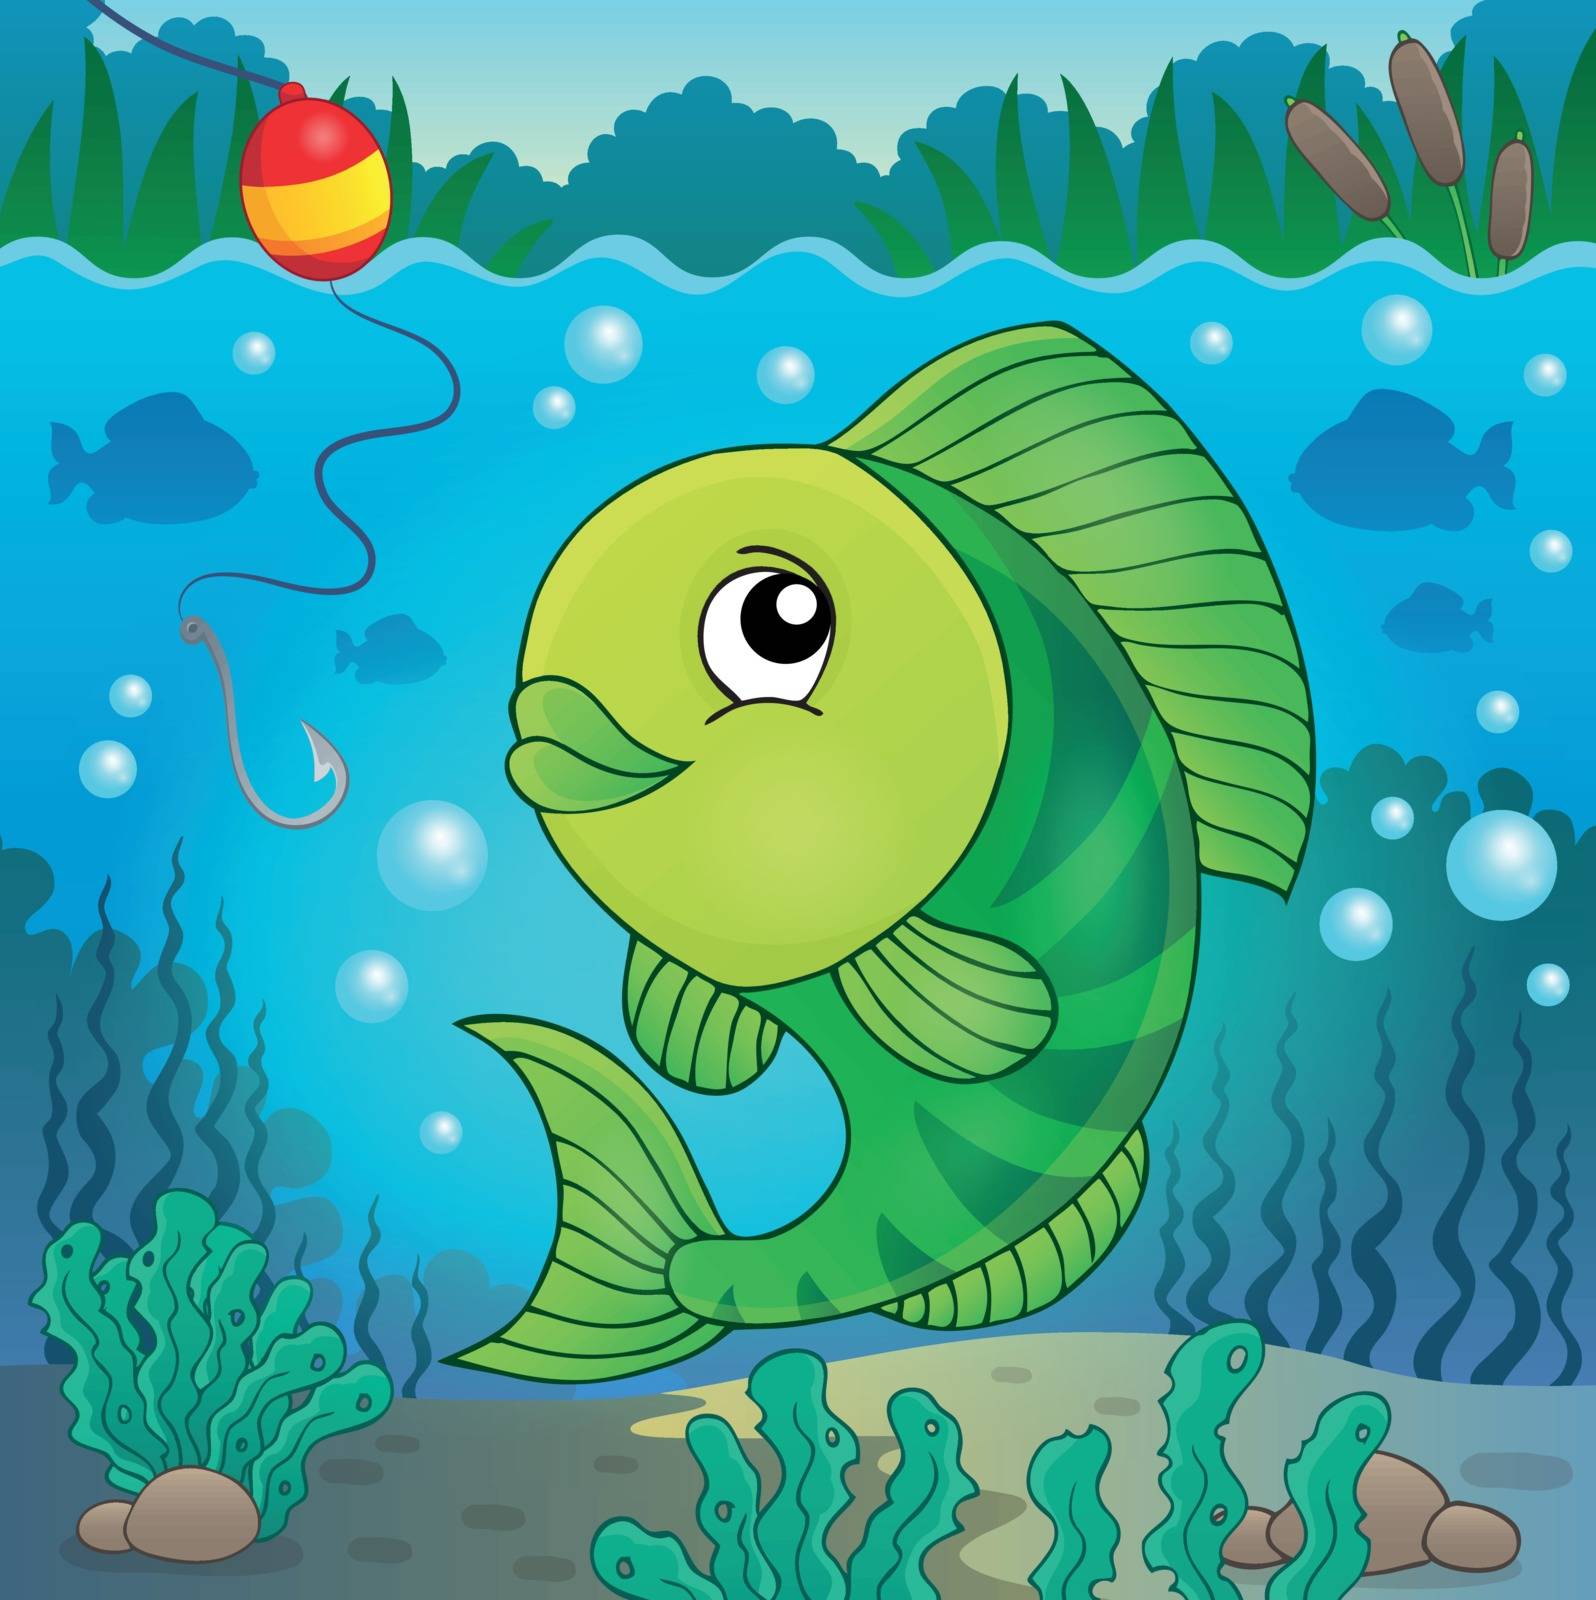 Freshwater fish topic image 5 - eps10 vector illustration.